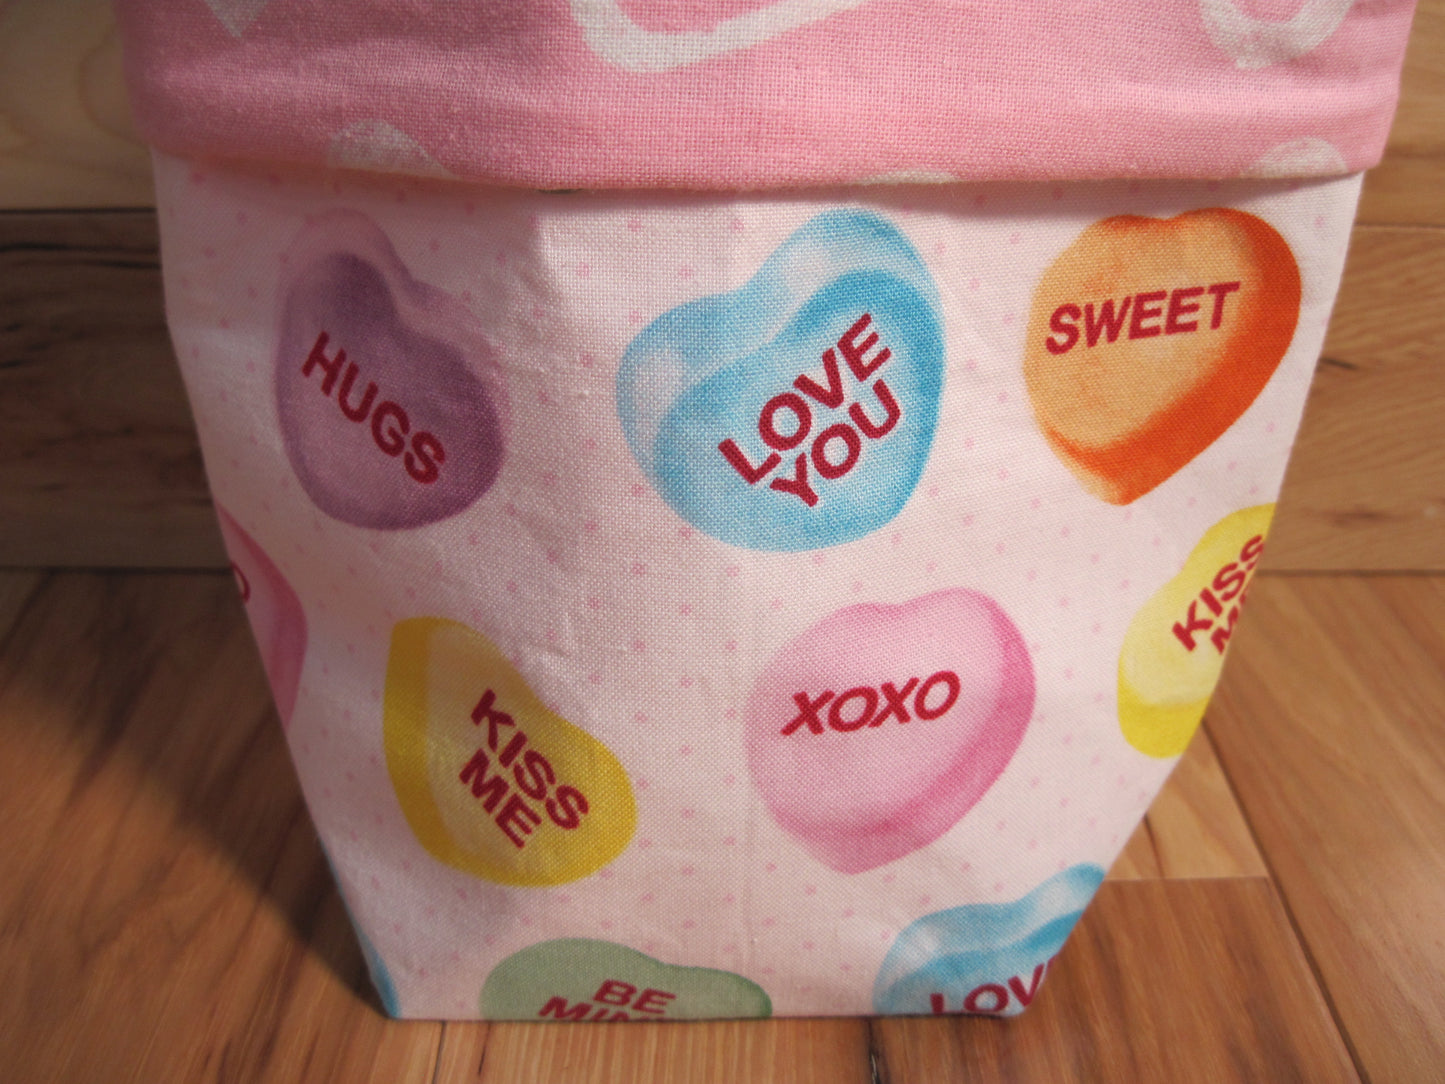 Wrist-Yarn Bag Valentine's Day Conversation Hearts w/ pink handle